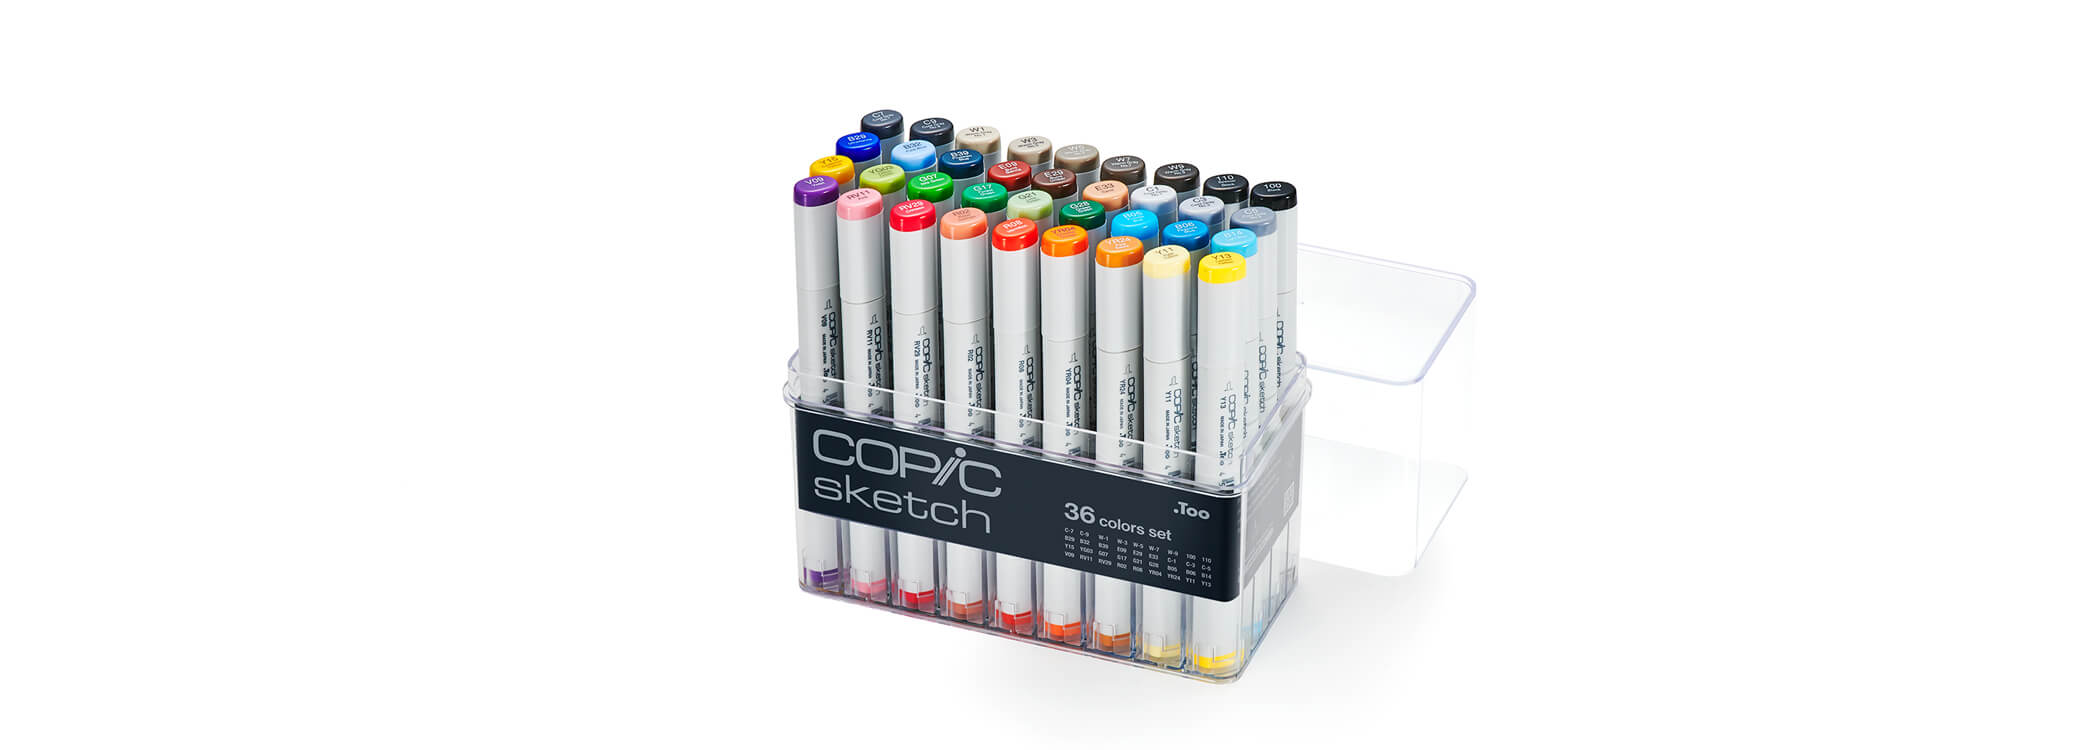 Copic Sketch 36 colors set - COPIC Official Website